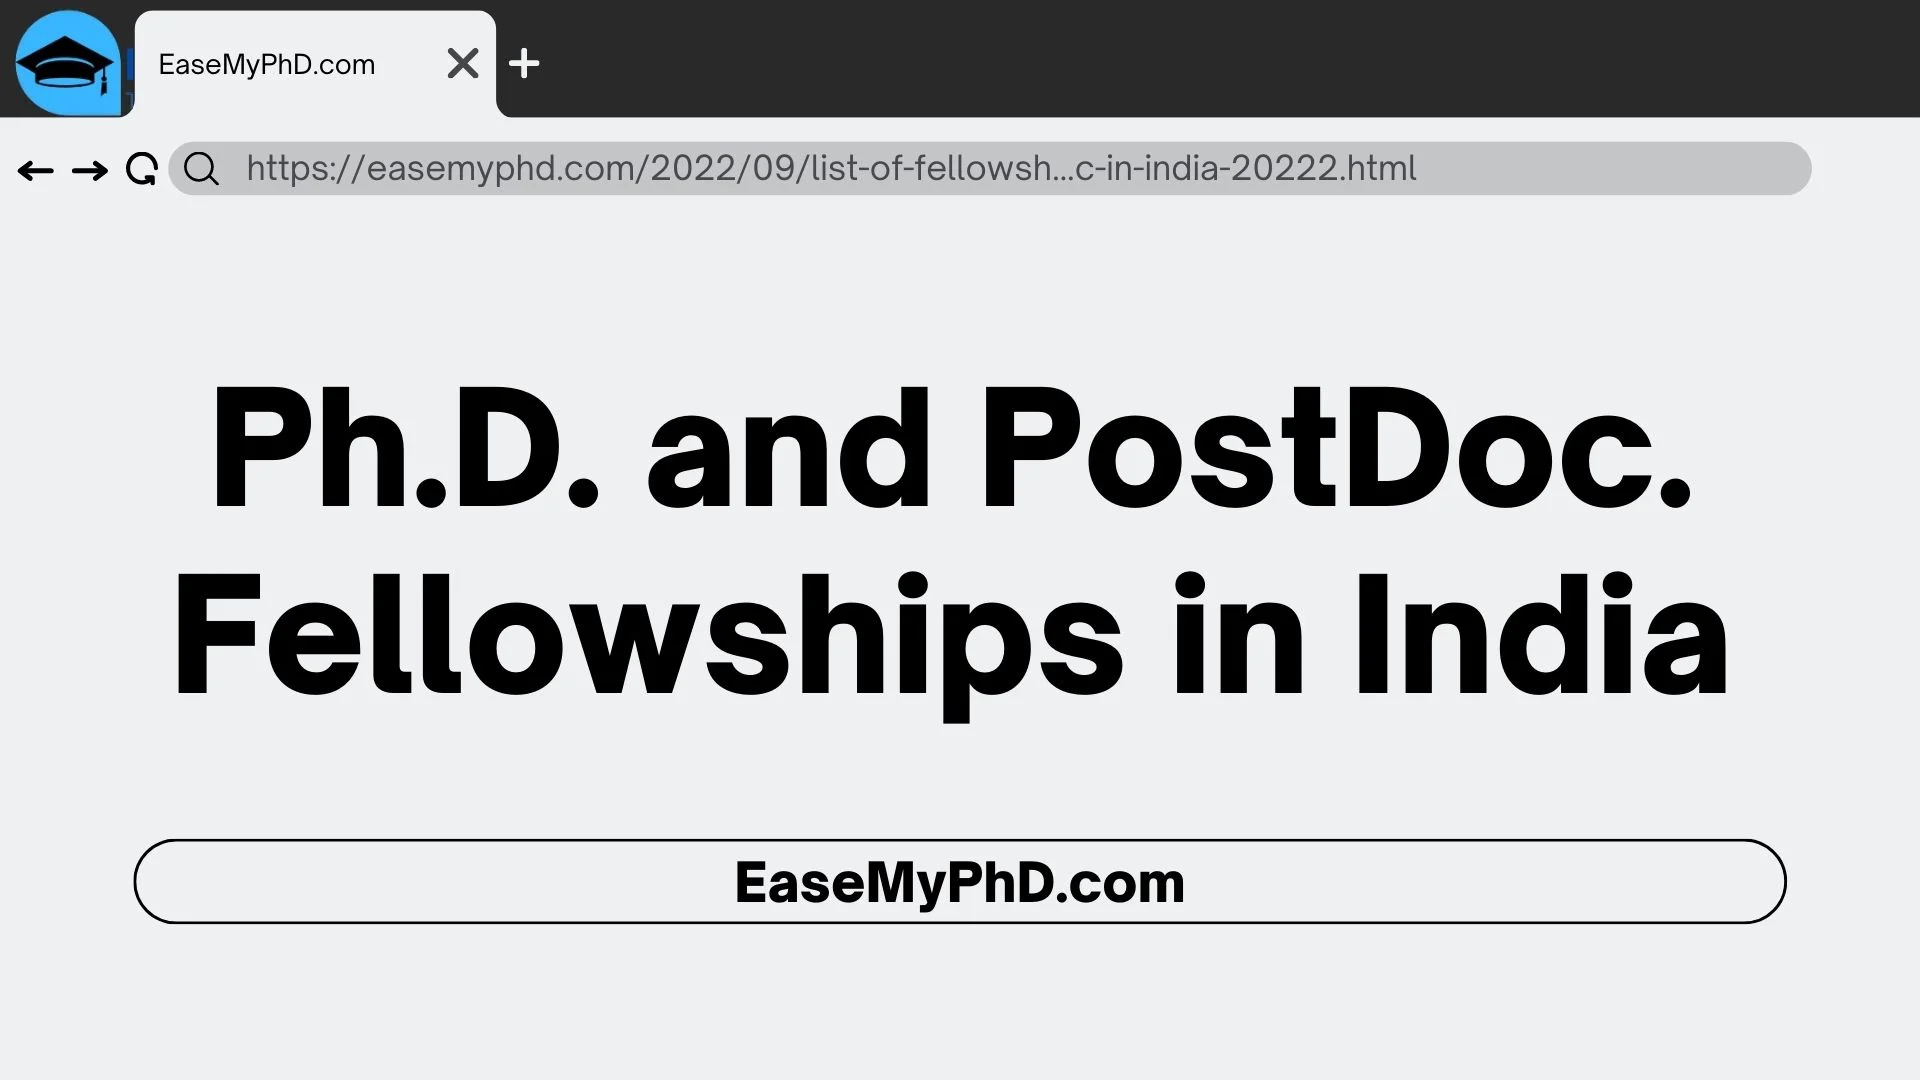 PhD and PostDoc Fellowship easemyphd.com